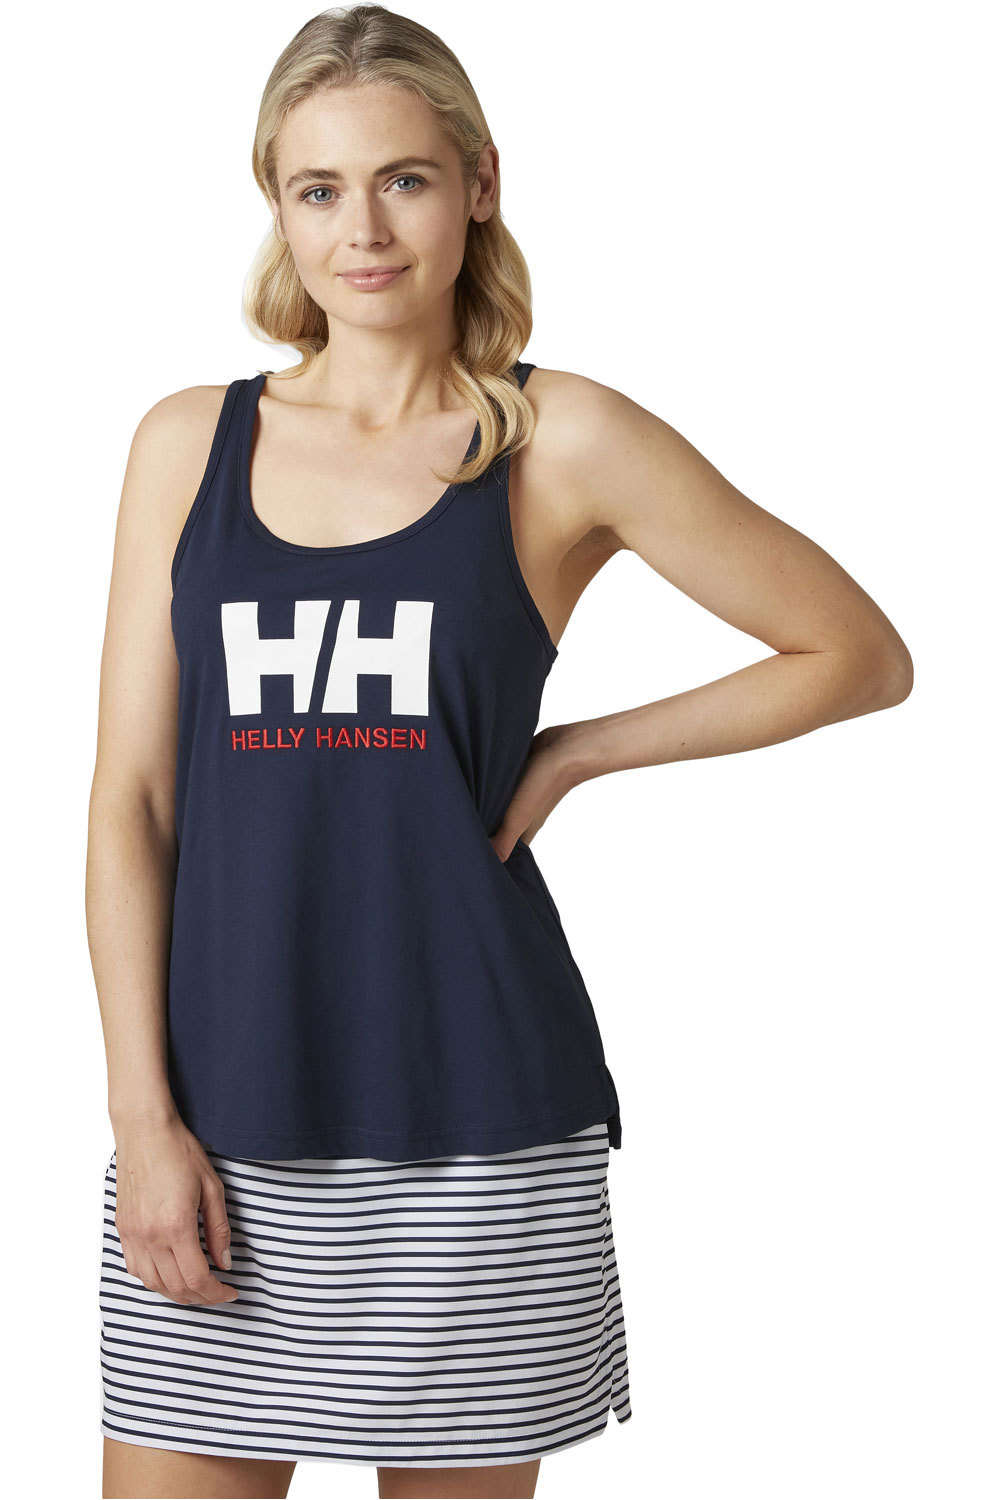 Helly Hansen camiseta tirantes W HH LOGO SINGLET vista frontal